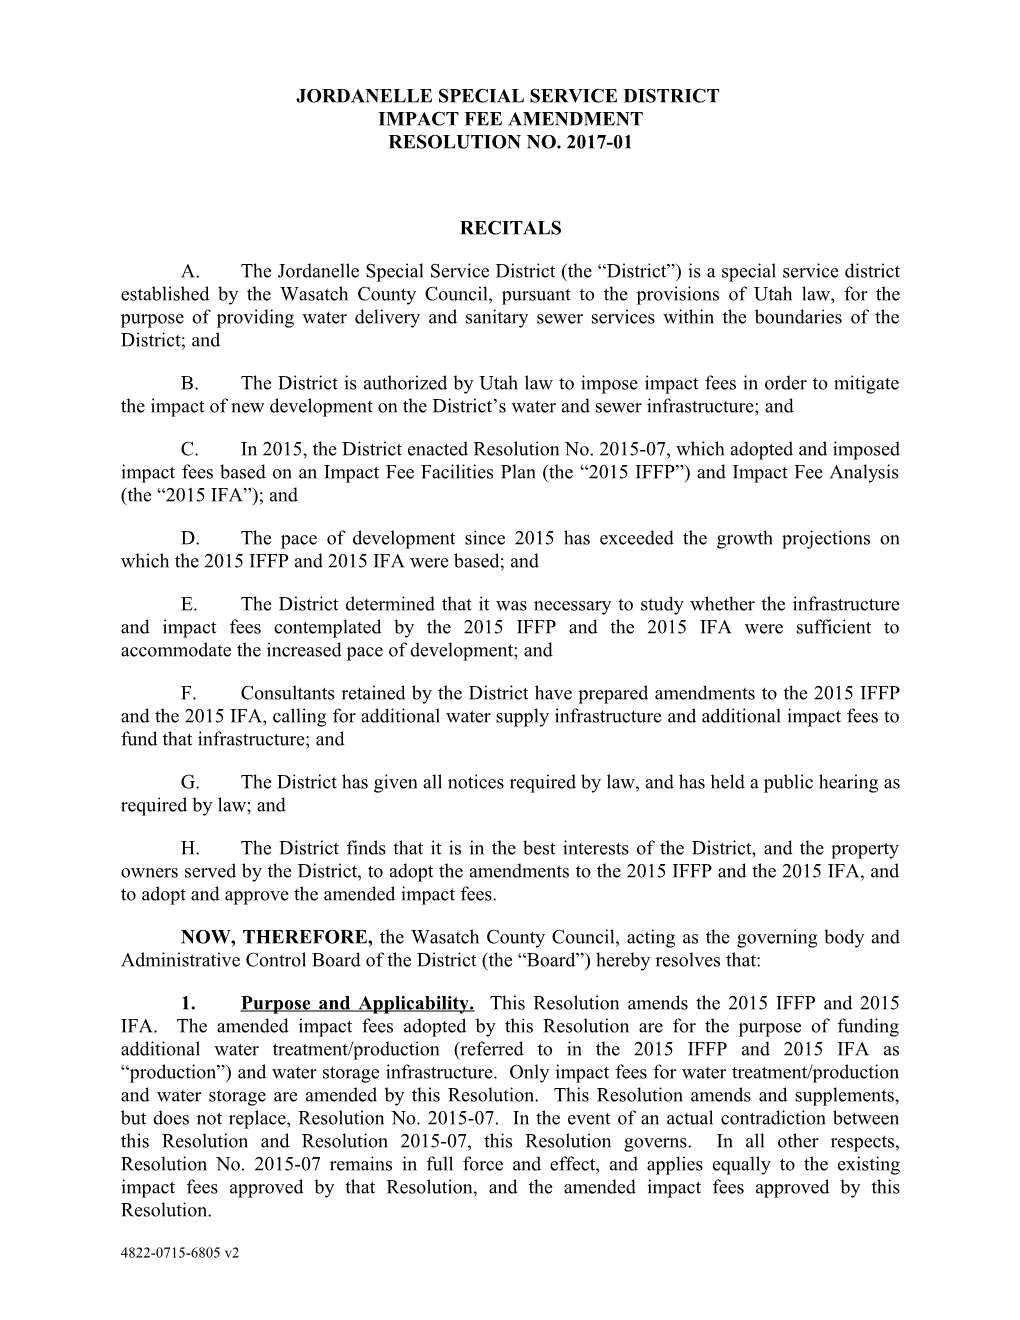 Jordanelle Special Service District IMPACT FEE Amendment Resolution No. 2017-01